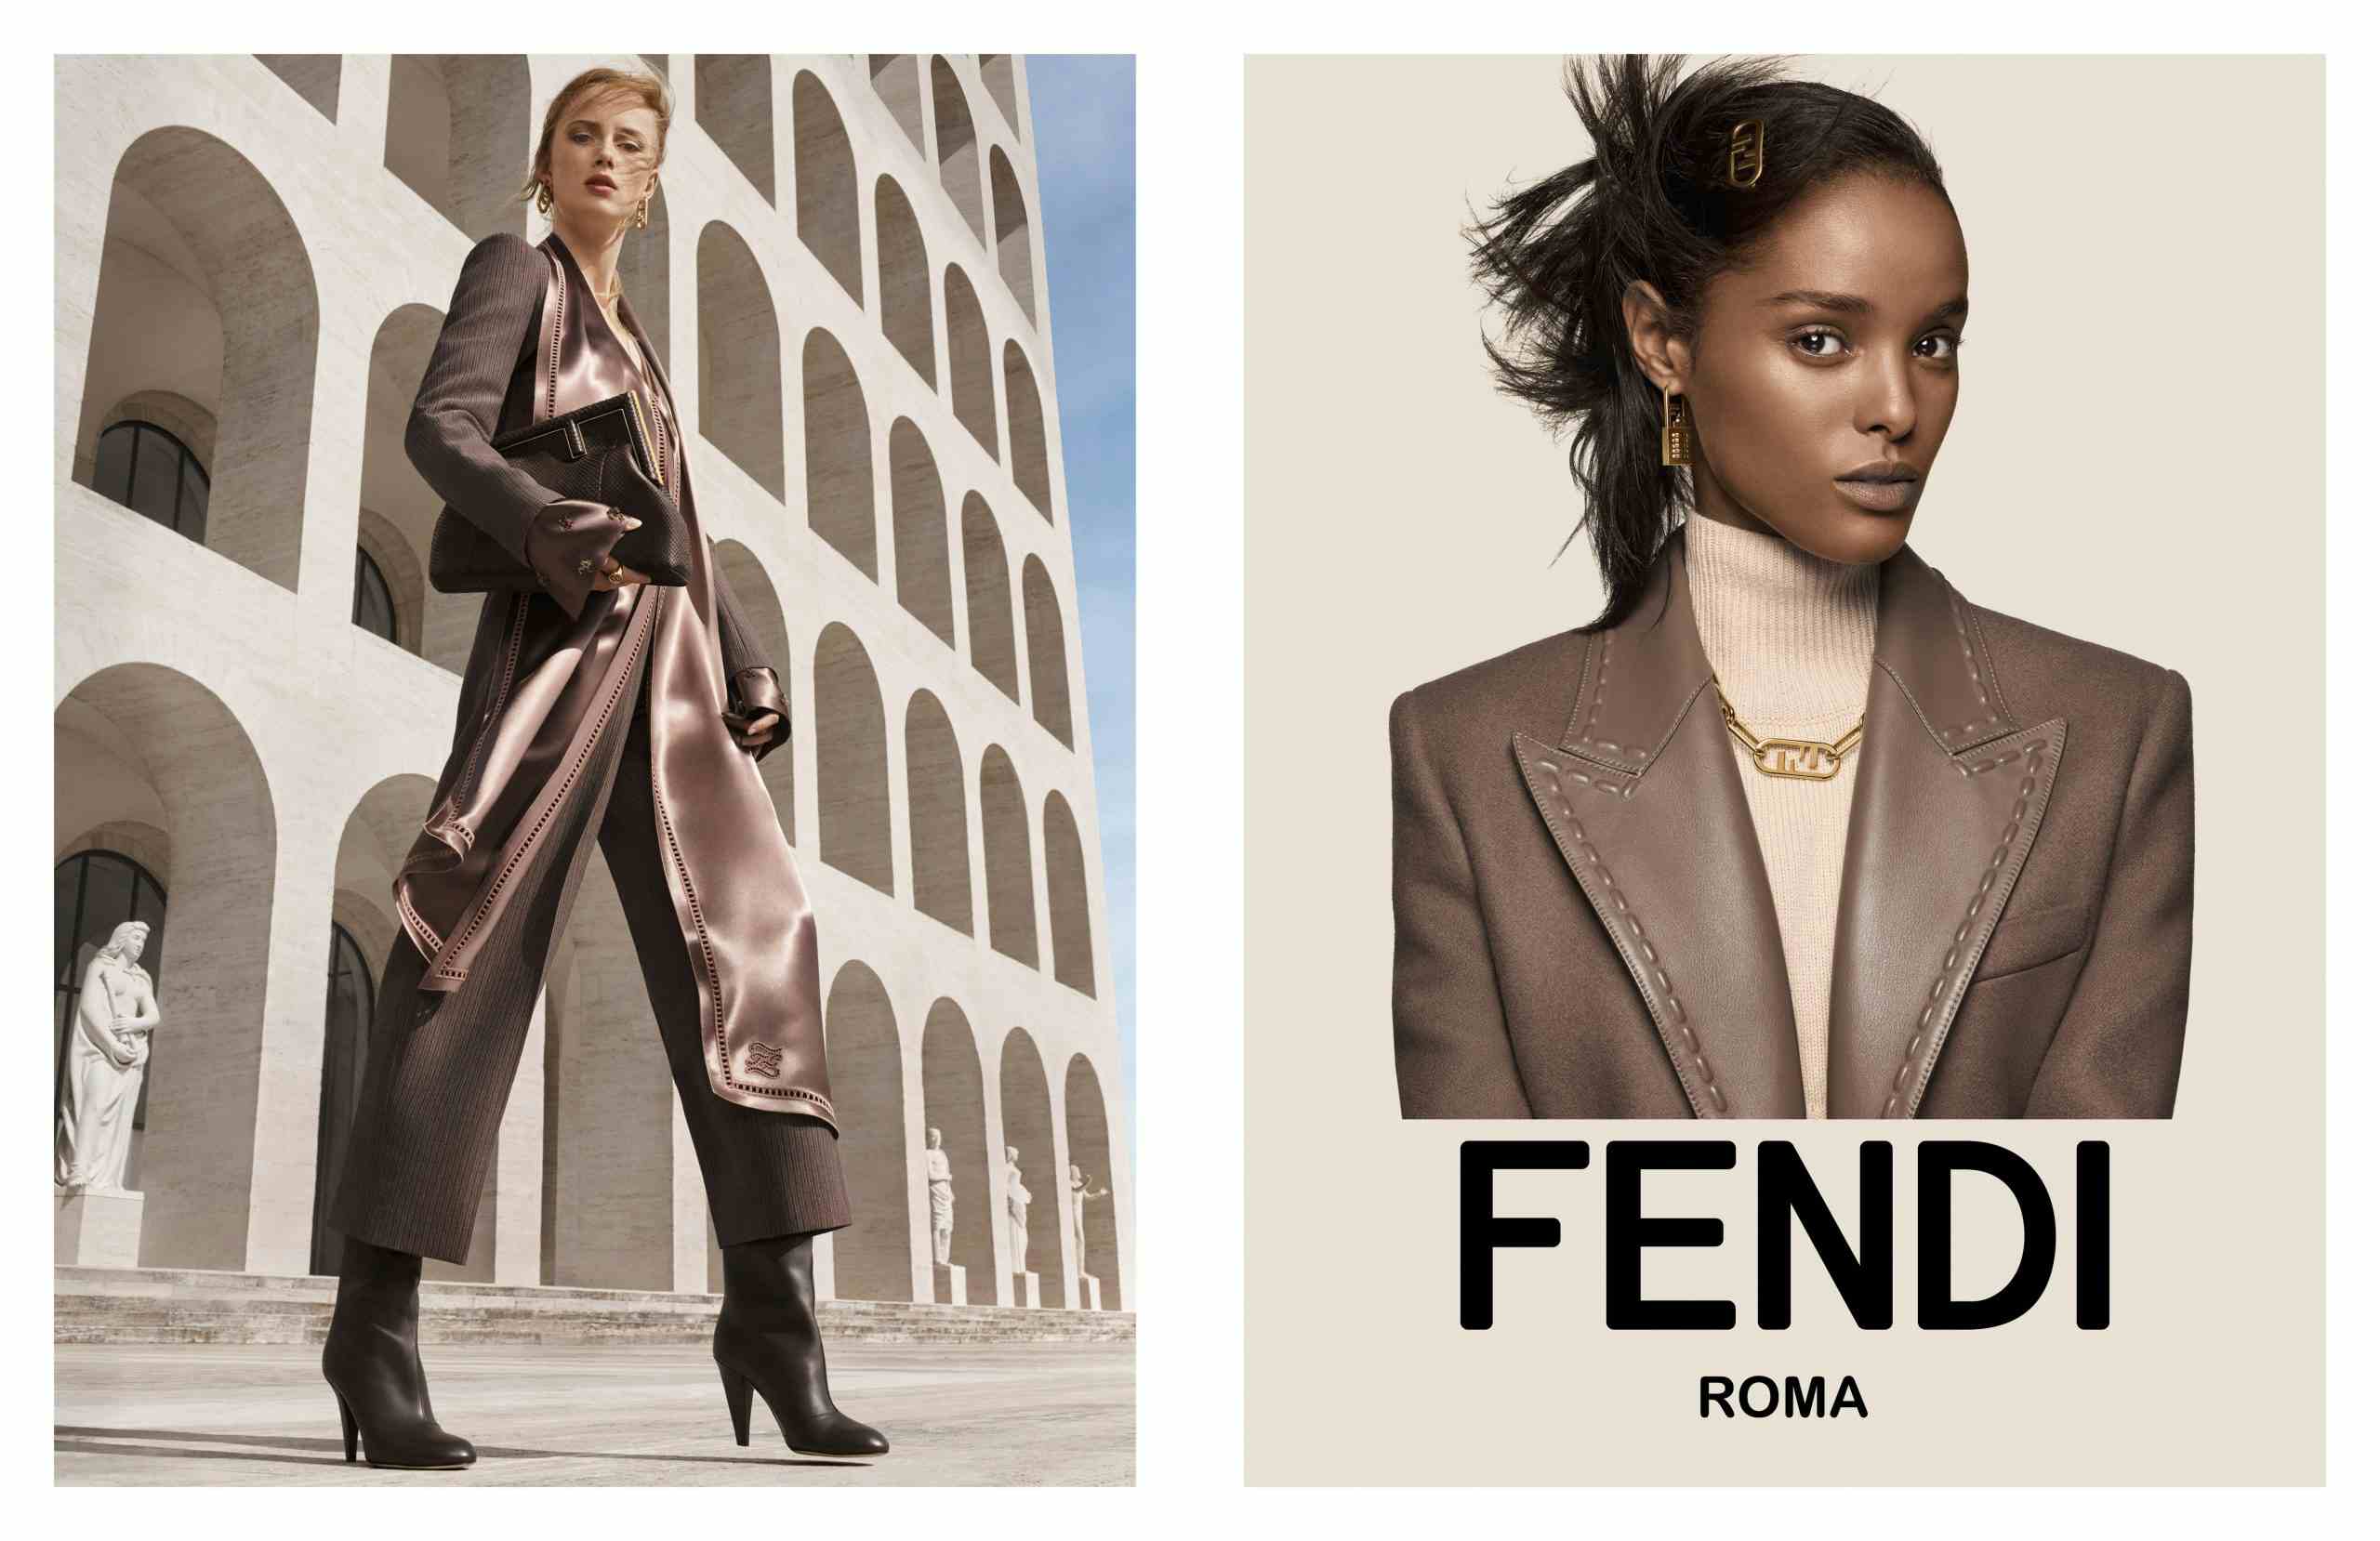 FENDI - FW21
Photographer: Craig McDean
Model: Rianne Van Rompaey, Malika Louback, He Cong, Tianna St Louis
Stylist: Melanie Ward
Location: Rome